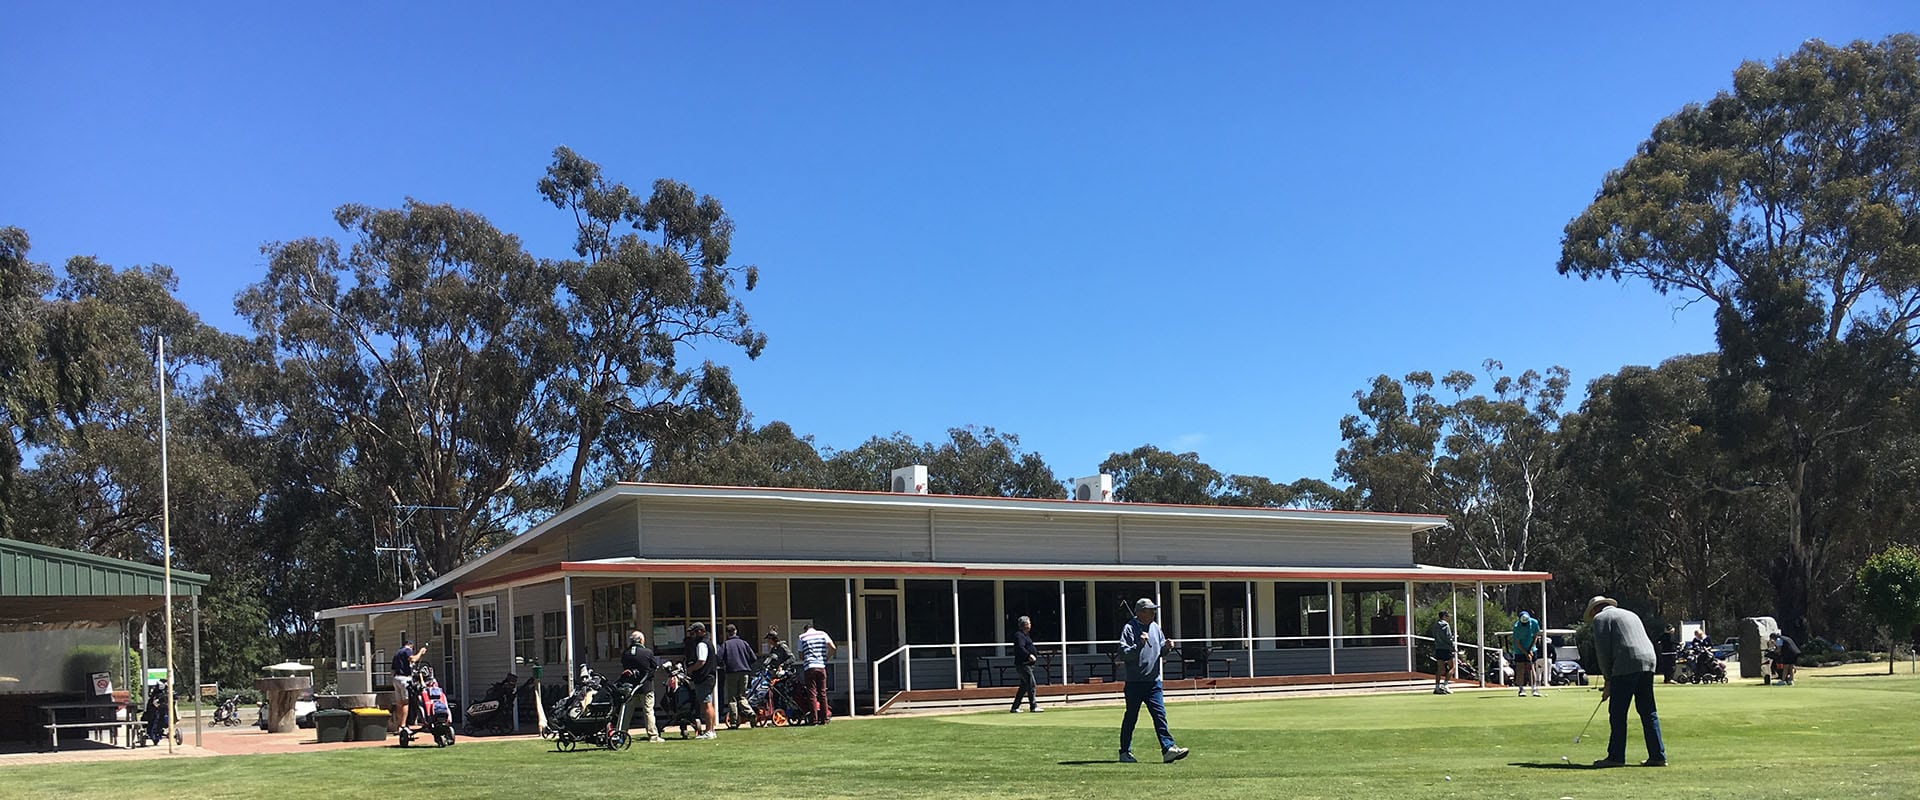 Golfers at Euroa Golf Club House Enjoying the Sunny Day for Golf